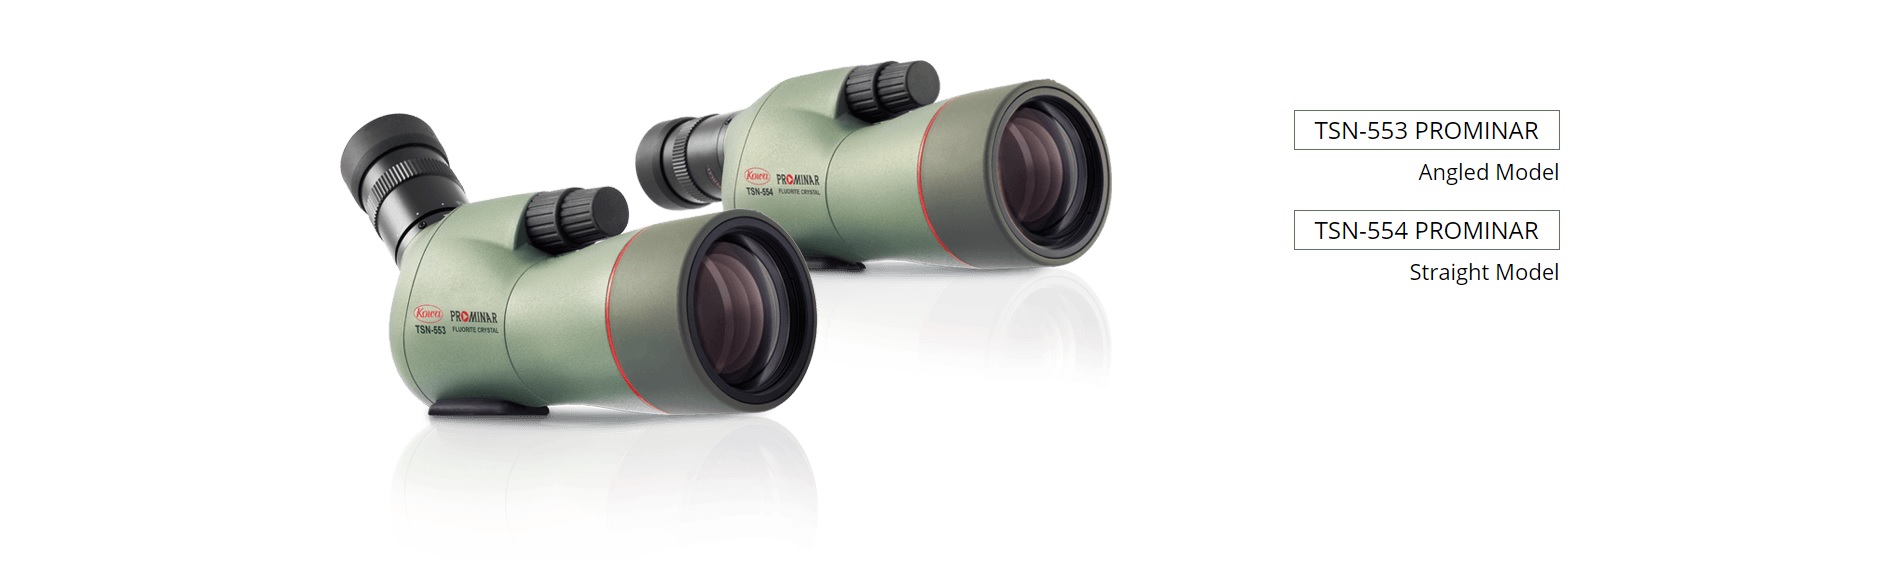 Kowa tsn 553 and 554 spotting scopes